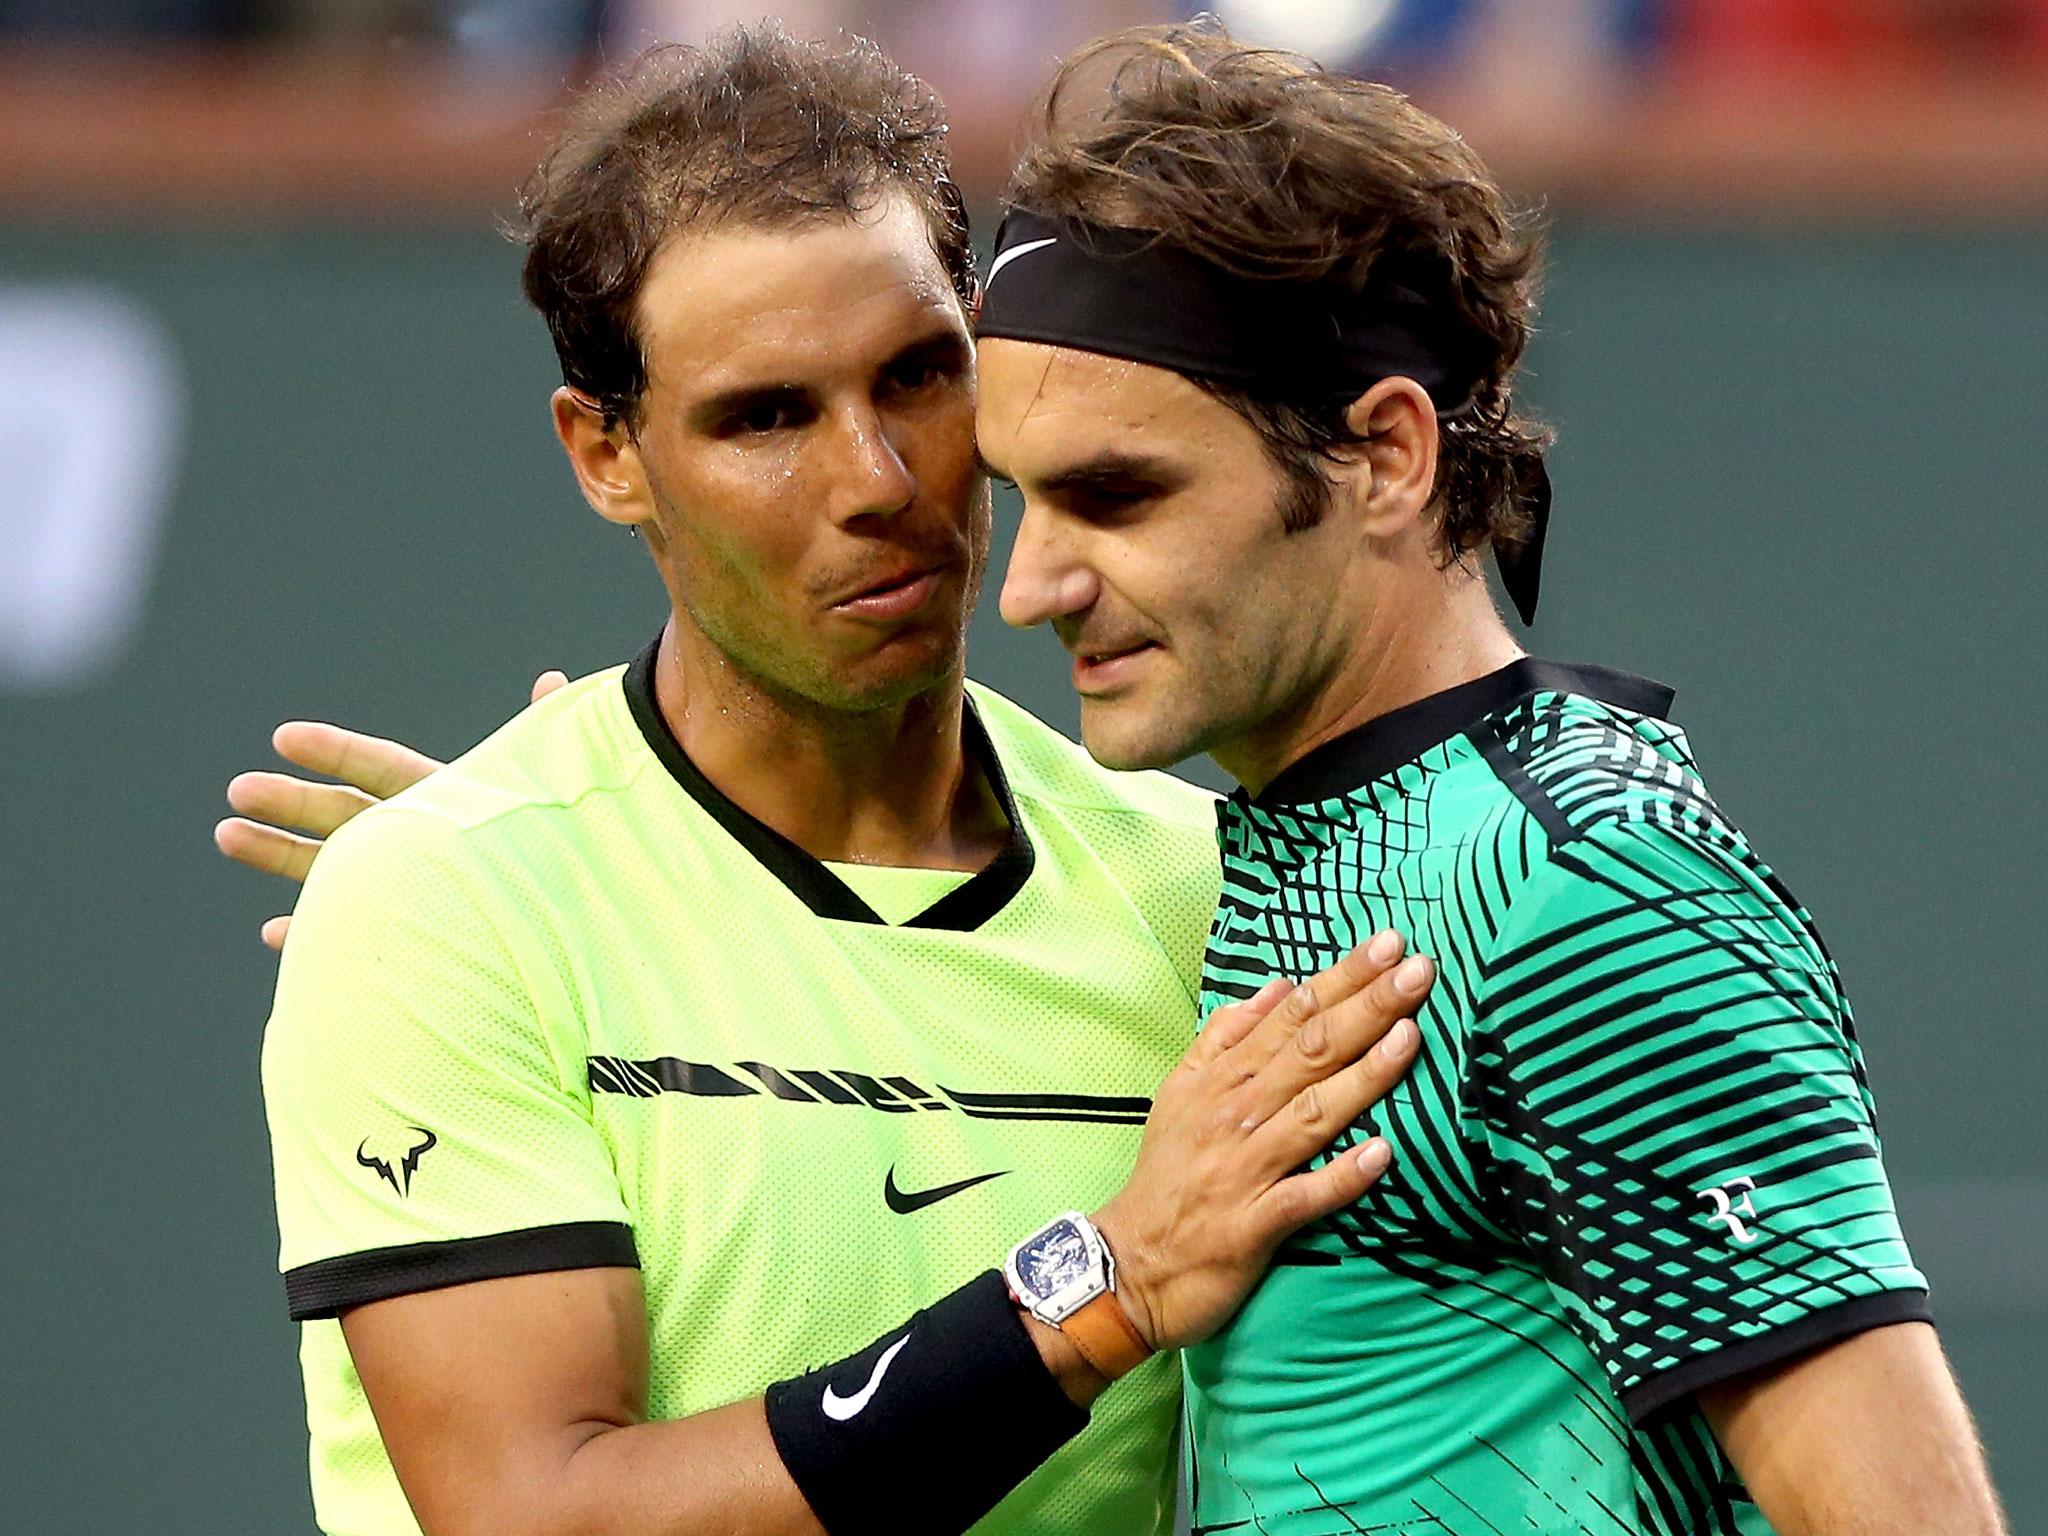 Roger Federer dismantled Rafael Nadal with a stunning display